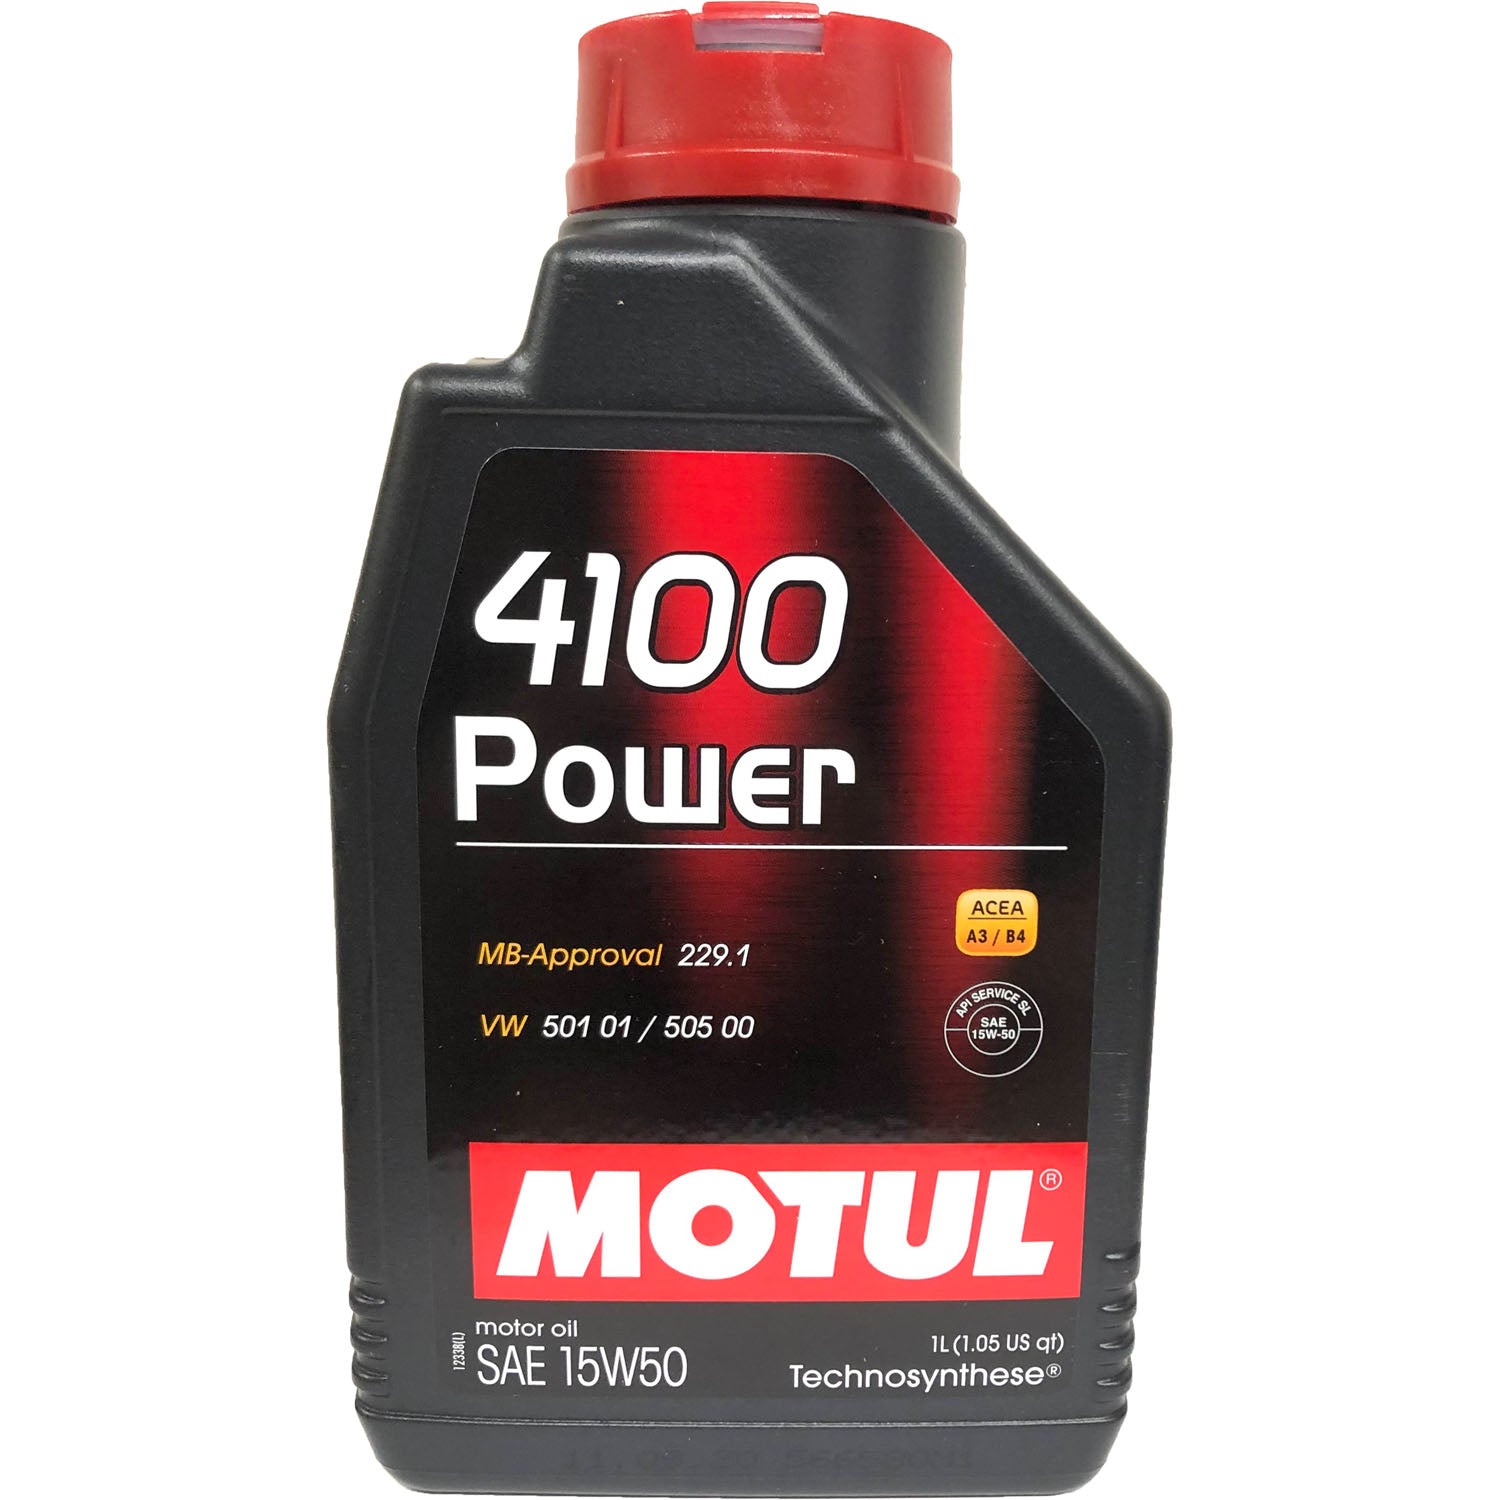 Motul 4100 Power Motor Oil 15W50 - 1 Liter